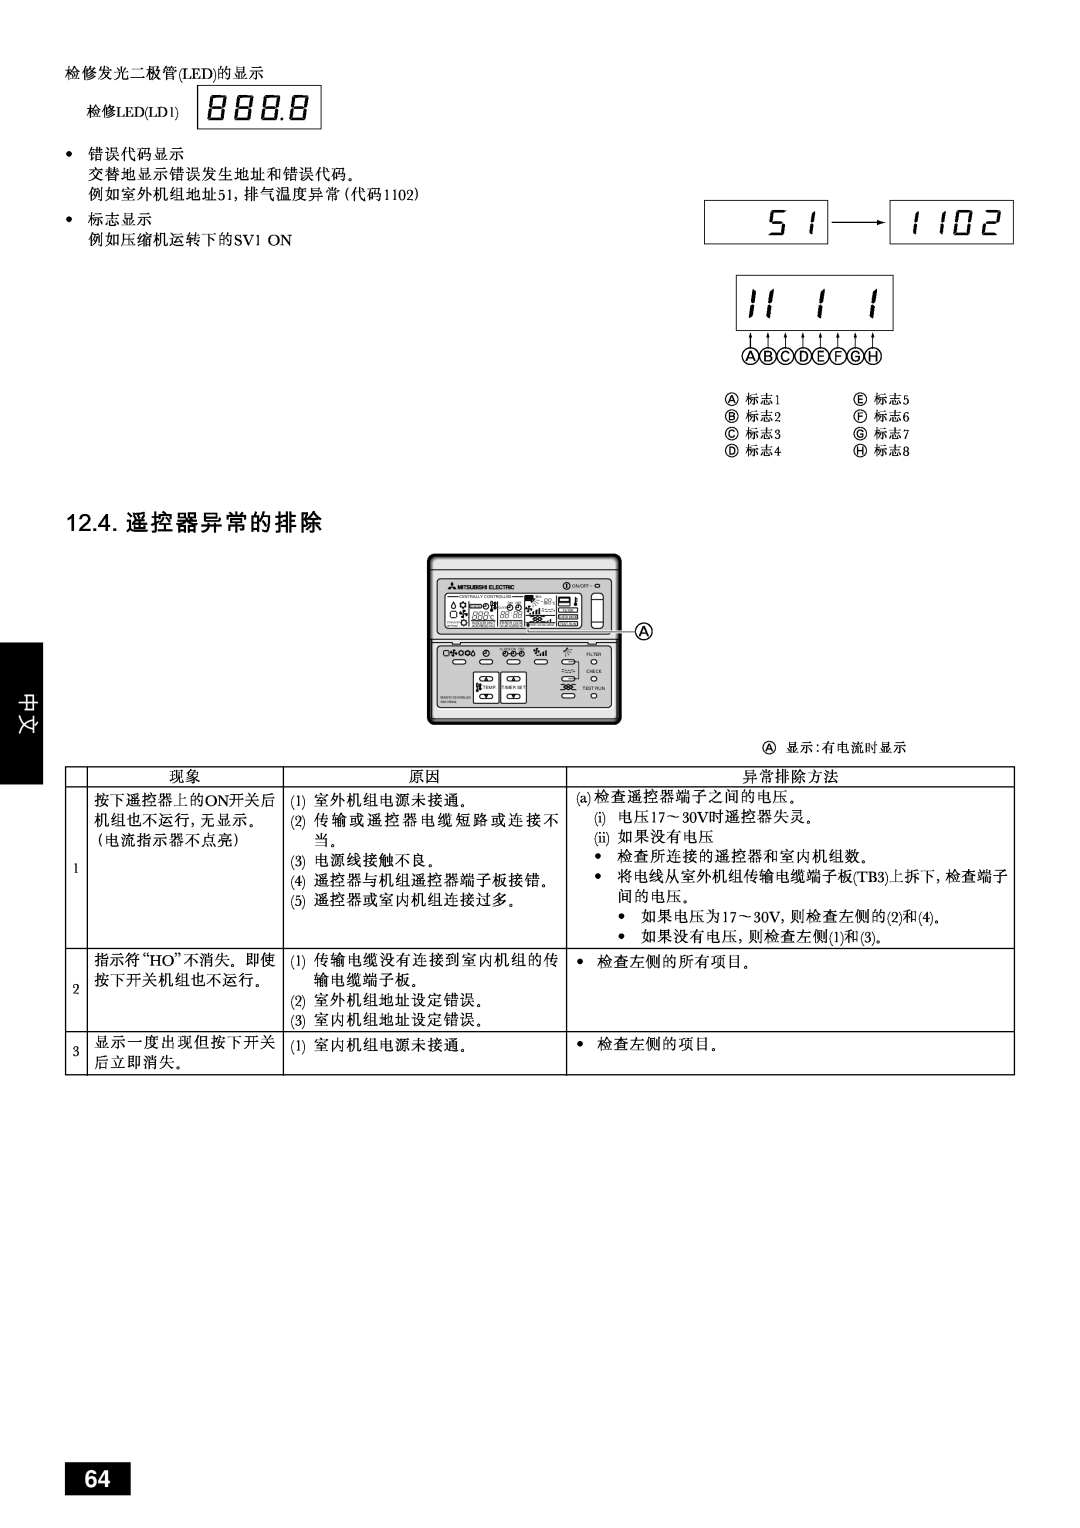 Mitsubishi Electronics PUHY-YMC installation manual Nokqk=, Abcdefgh 